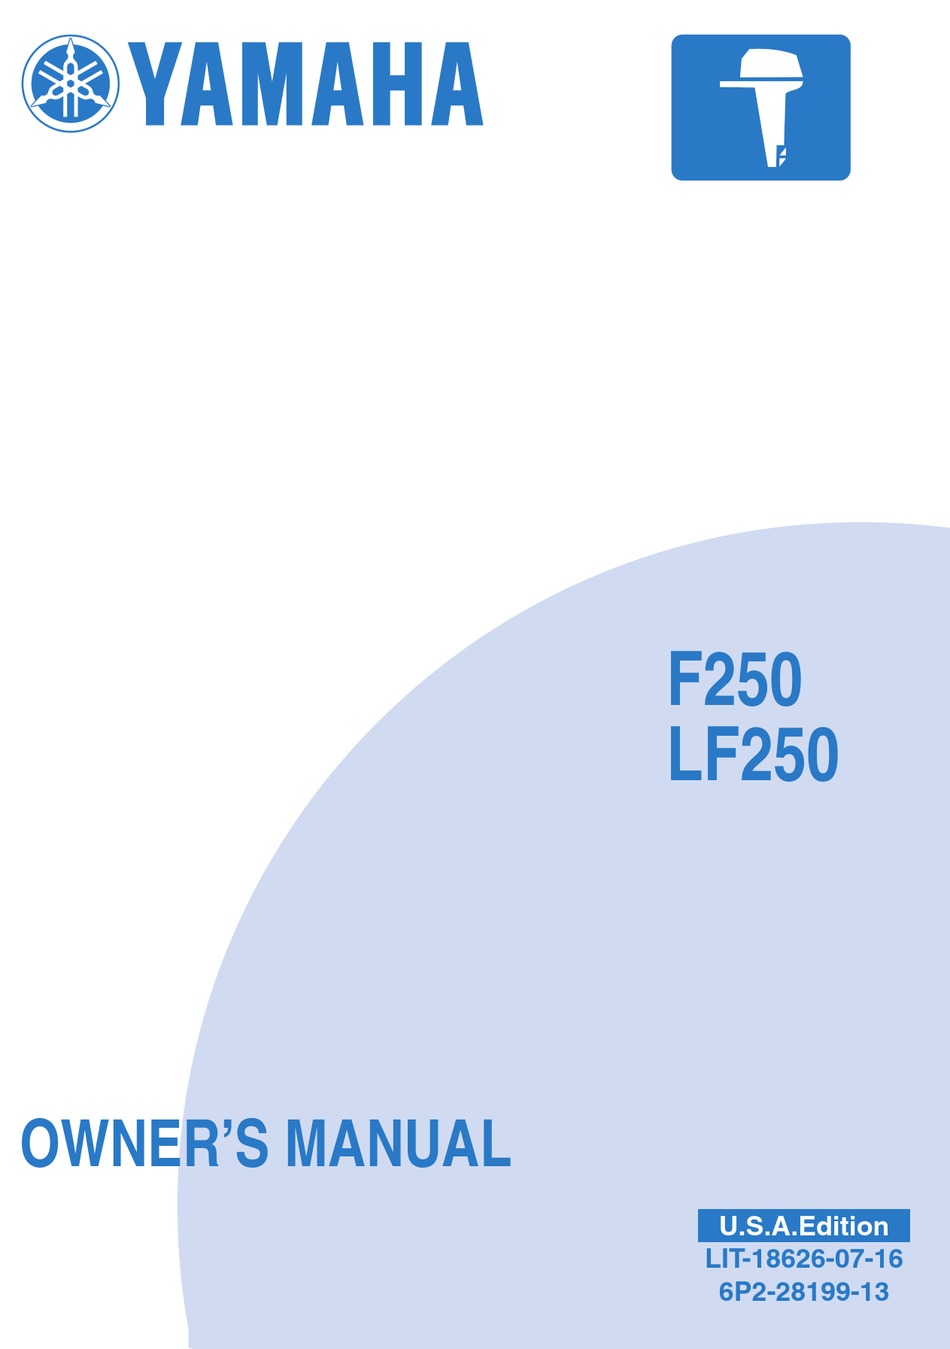 YAMAHA F250 OWNER'S MANUAL Pdf Download | ManualsLib